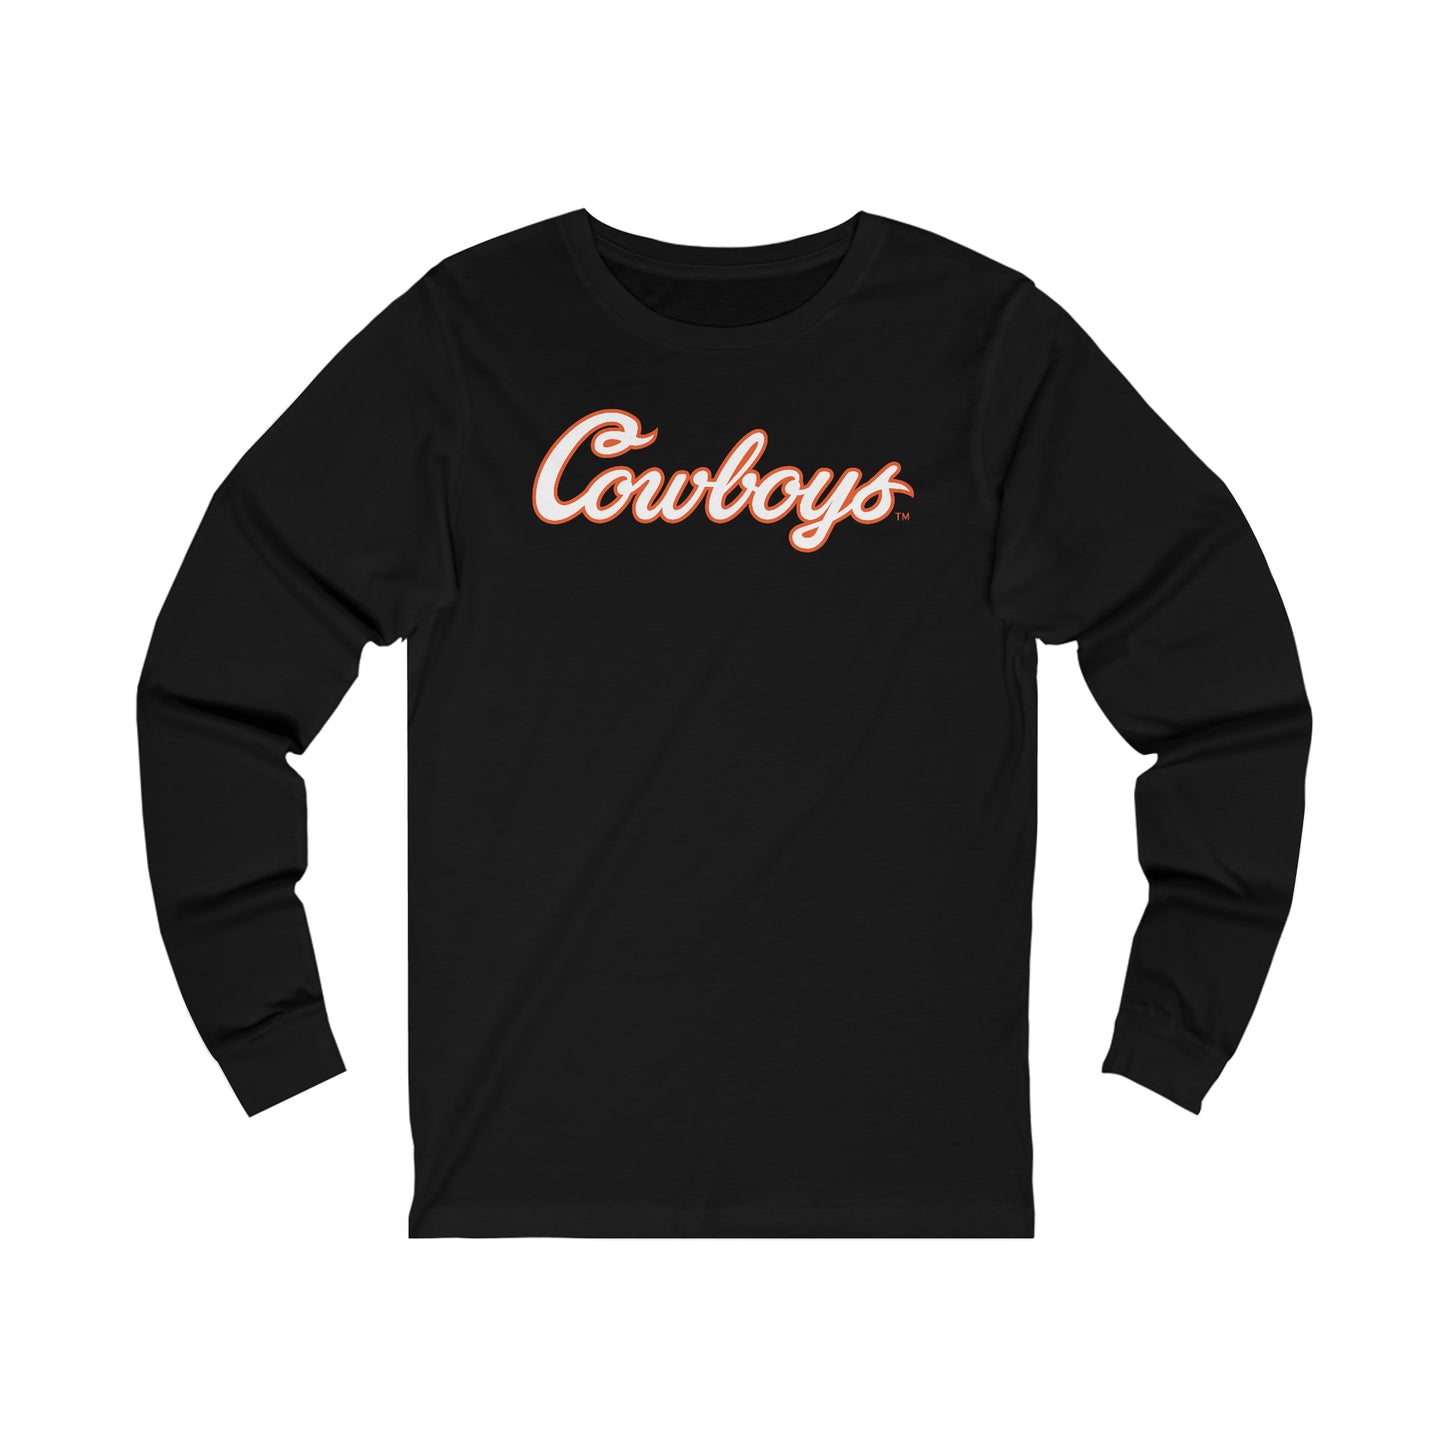 John-Michael Wright #51 Cursive Cowboys Long Sleeve T-Shirt